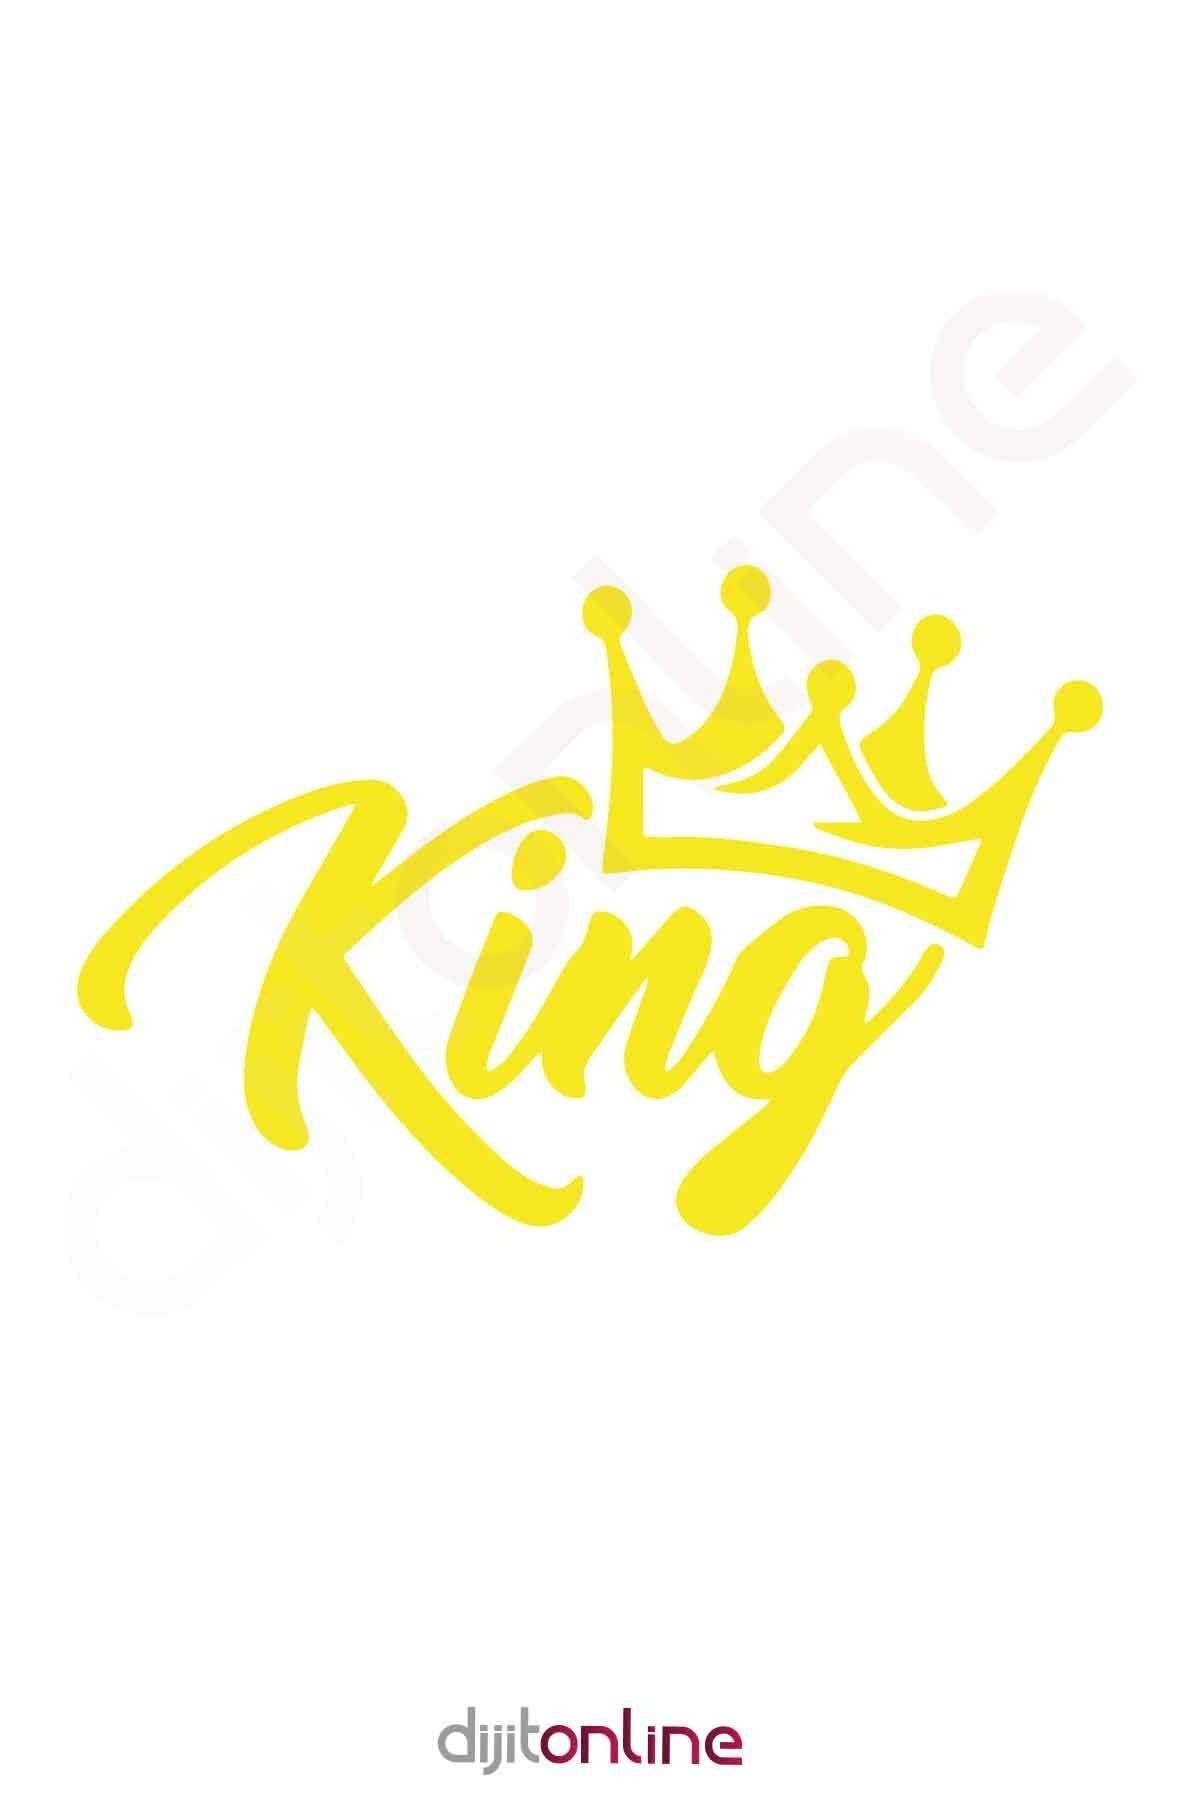 Dijitonline Kral Tacı King Oto Sticker Araba Cam Sticker 25x15cm